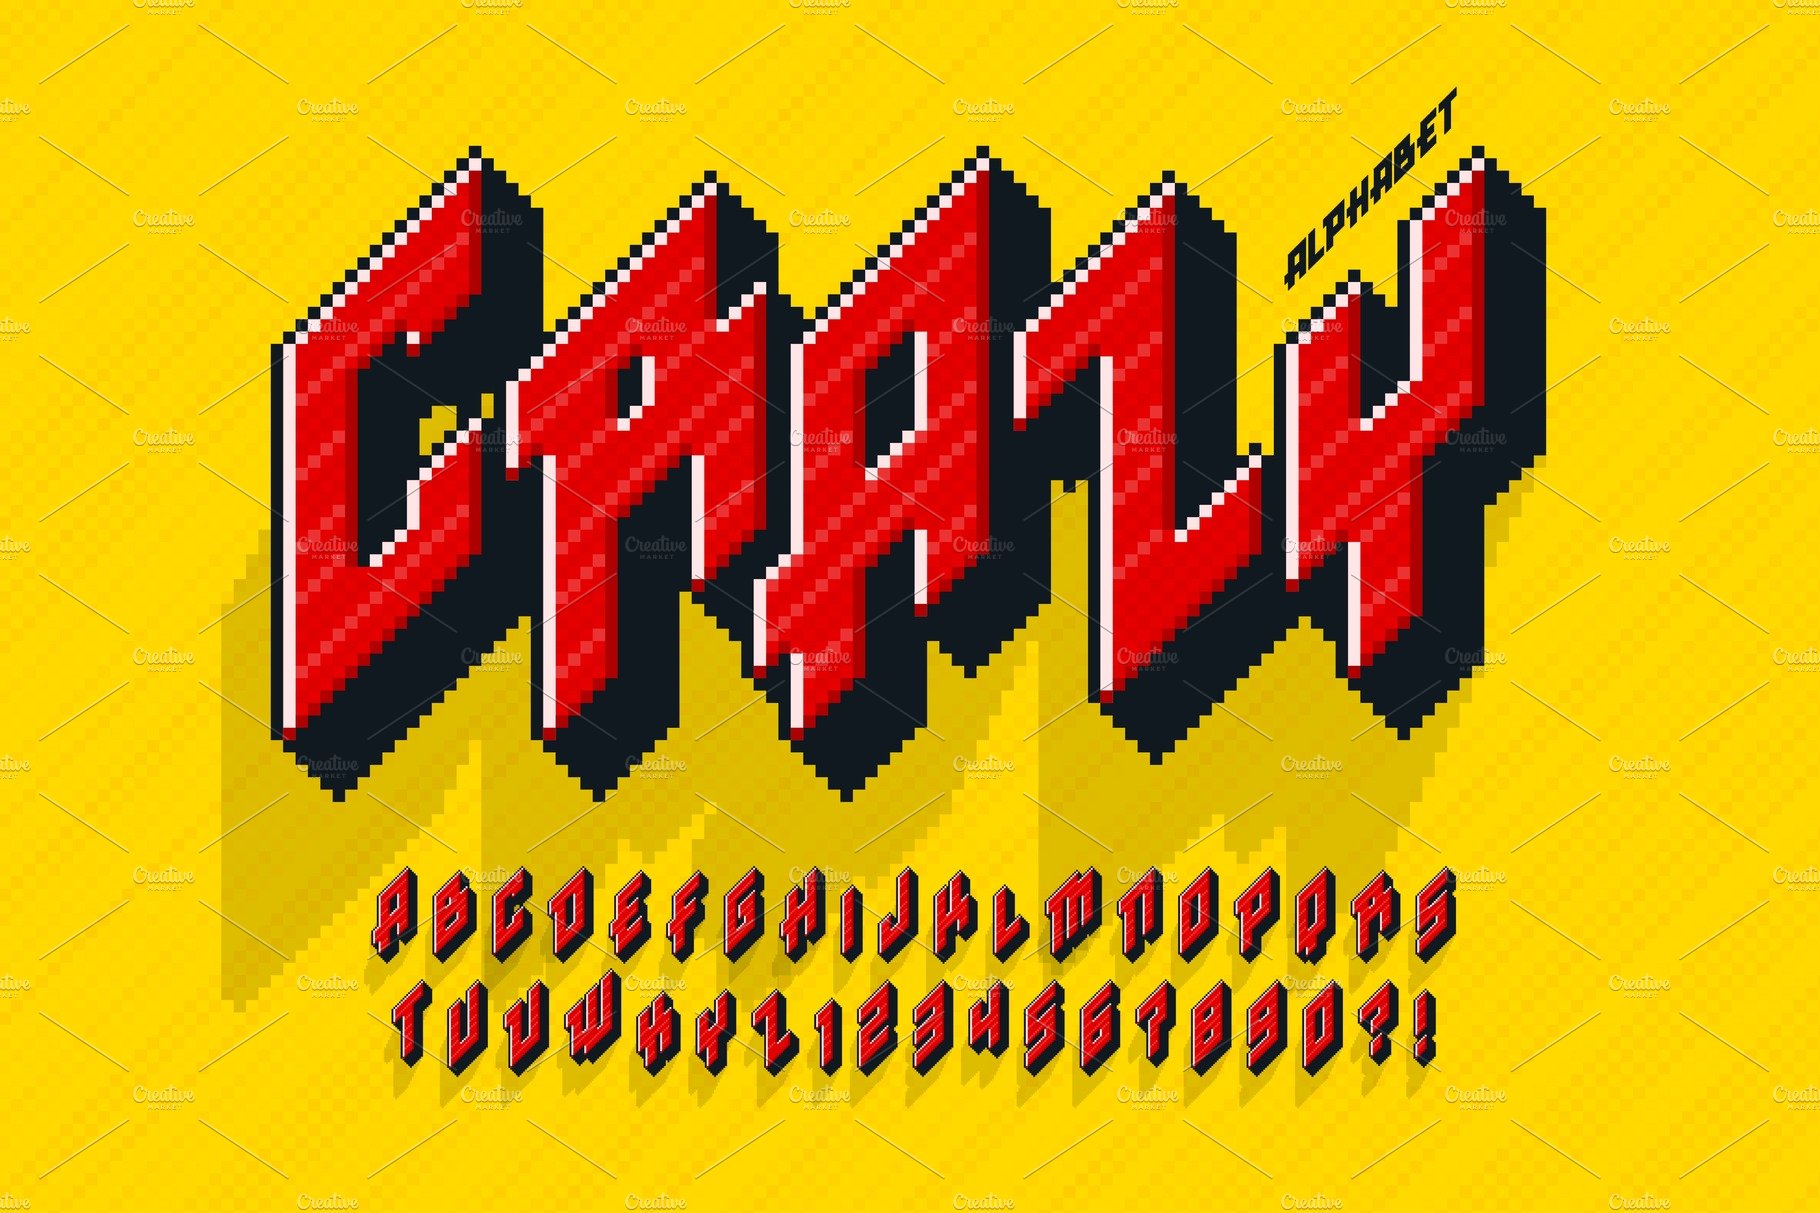 Pixel vector alphabet design cover image.